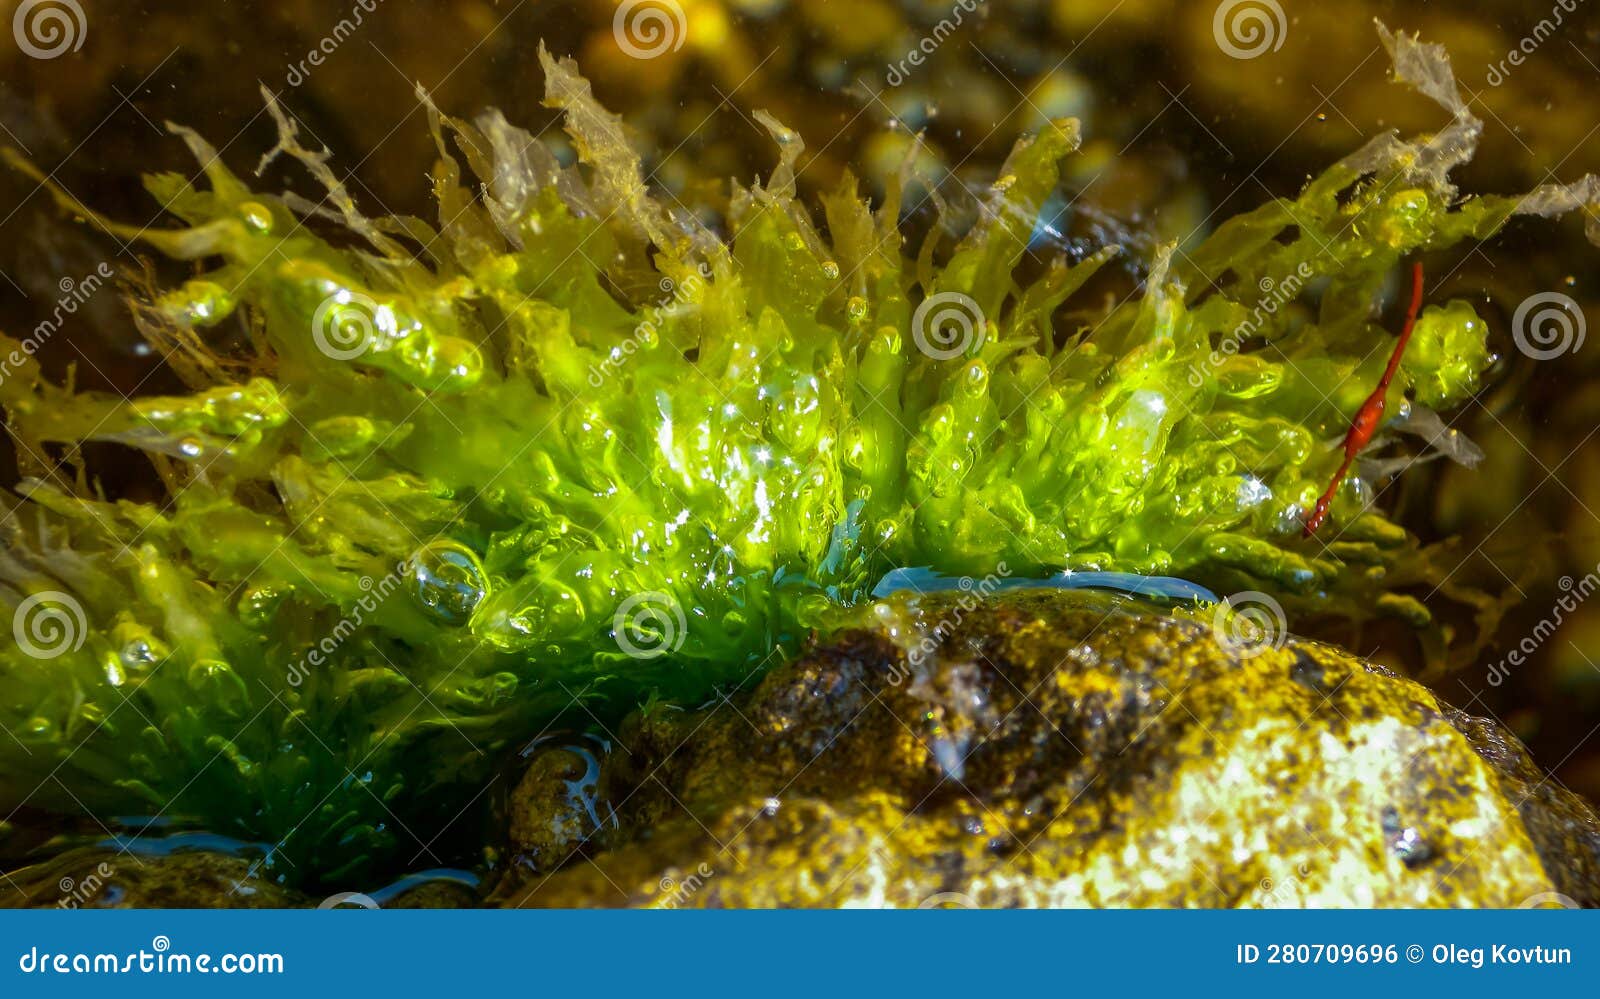 green algae enteromorpha sp. (ulva) on a stone at low tide, black sea